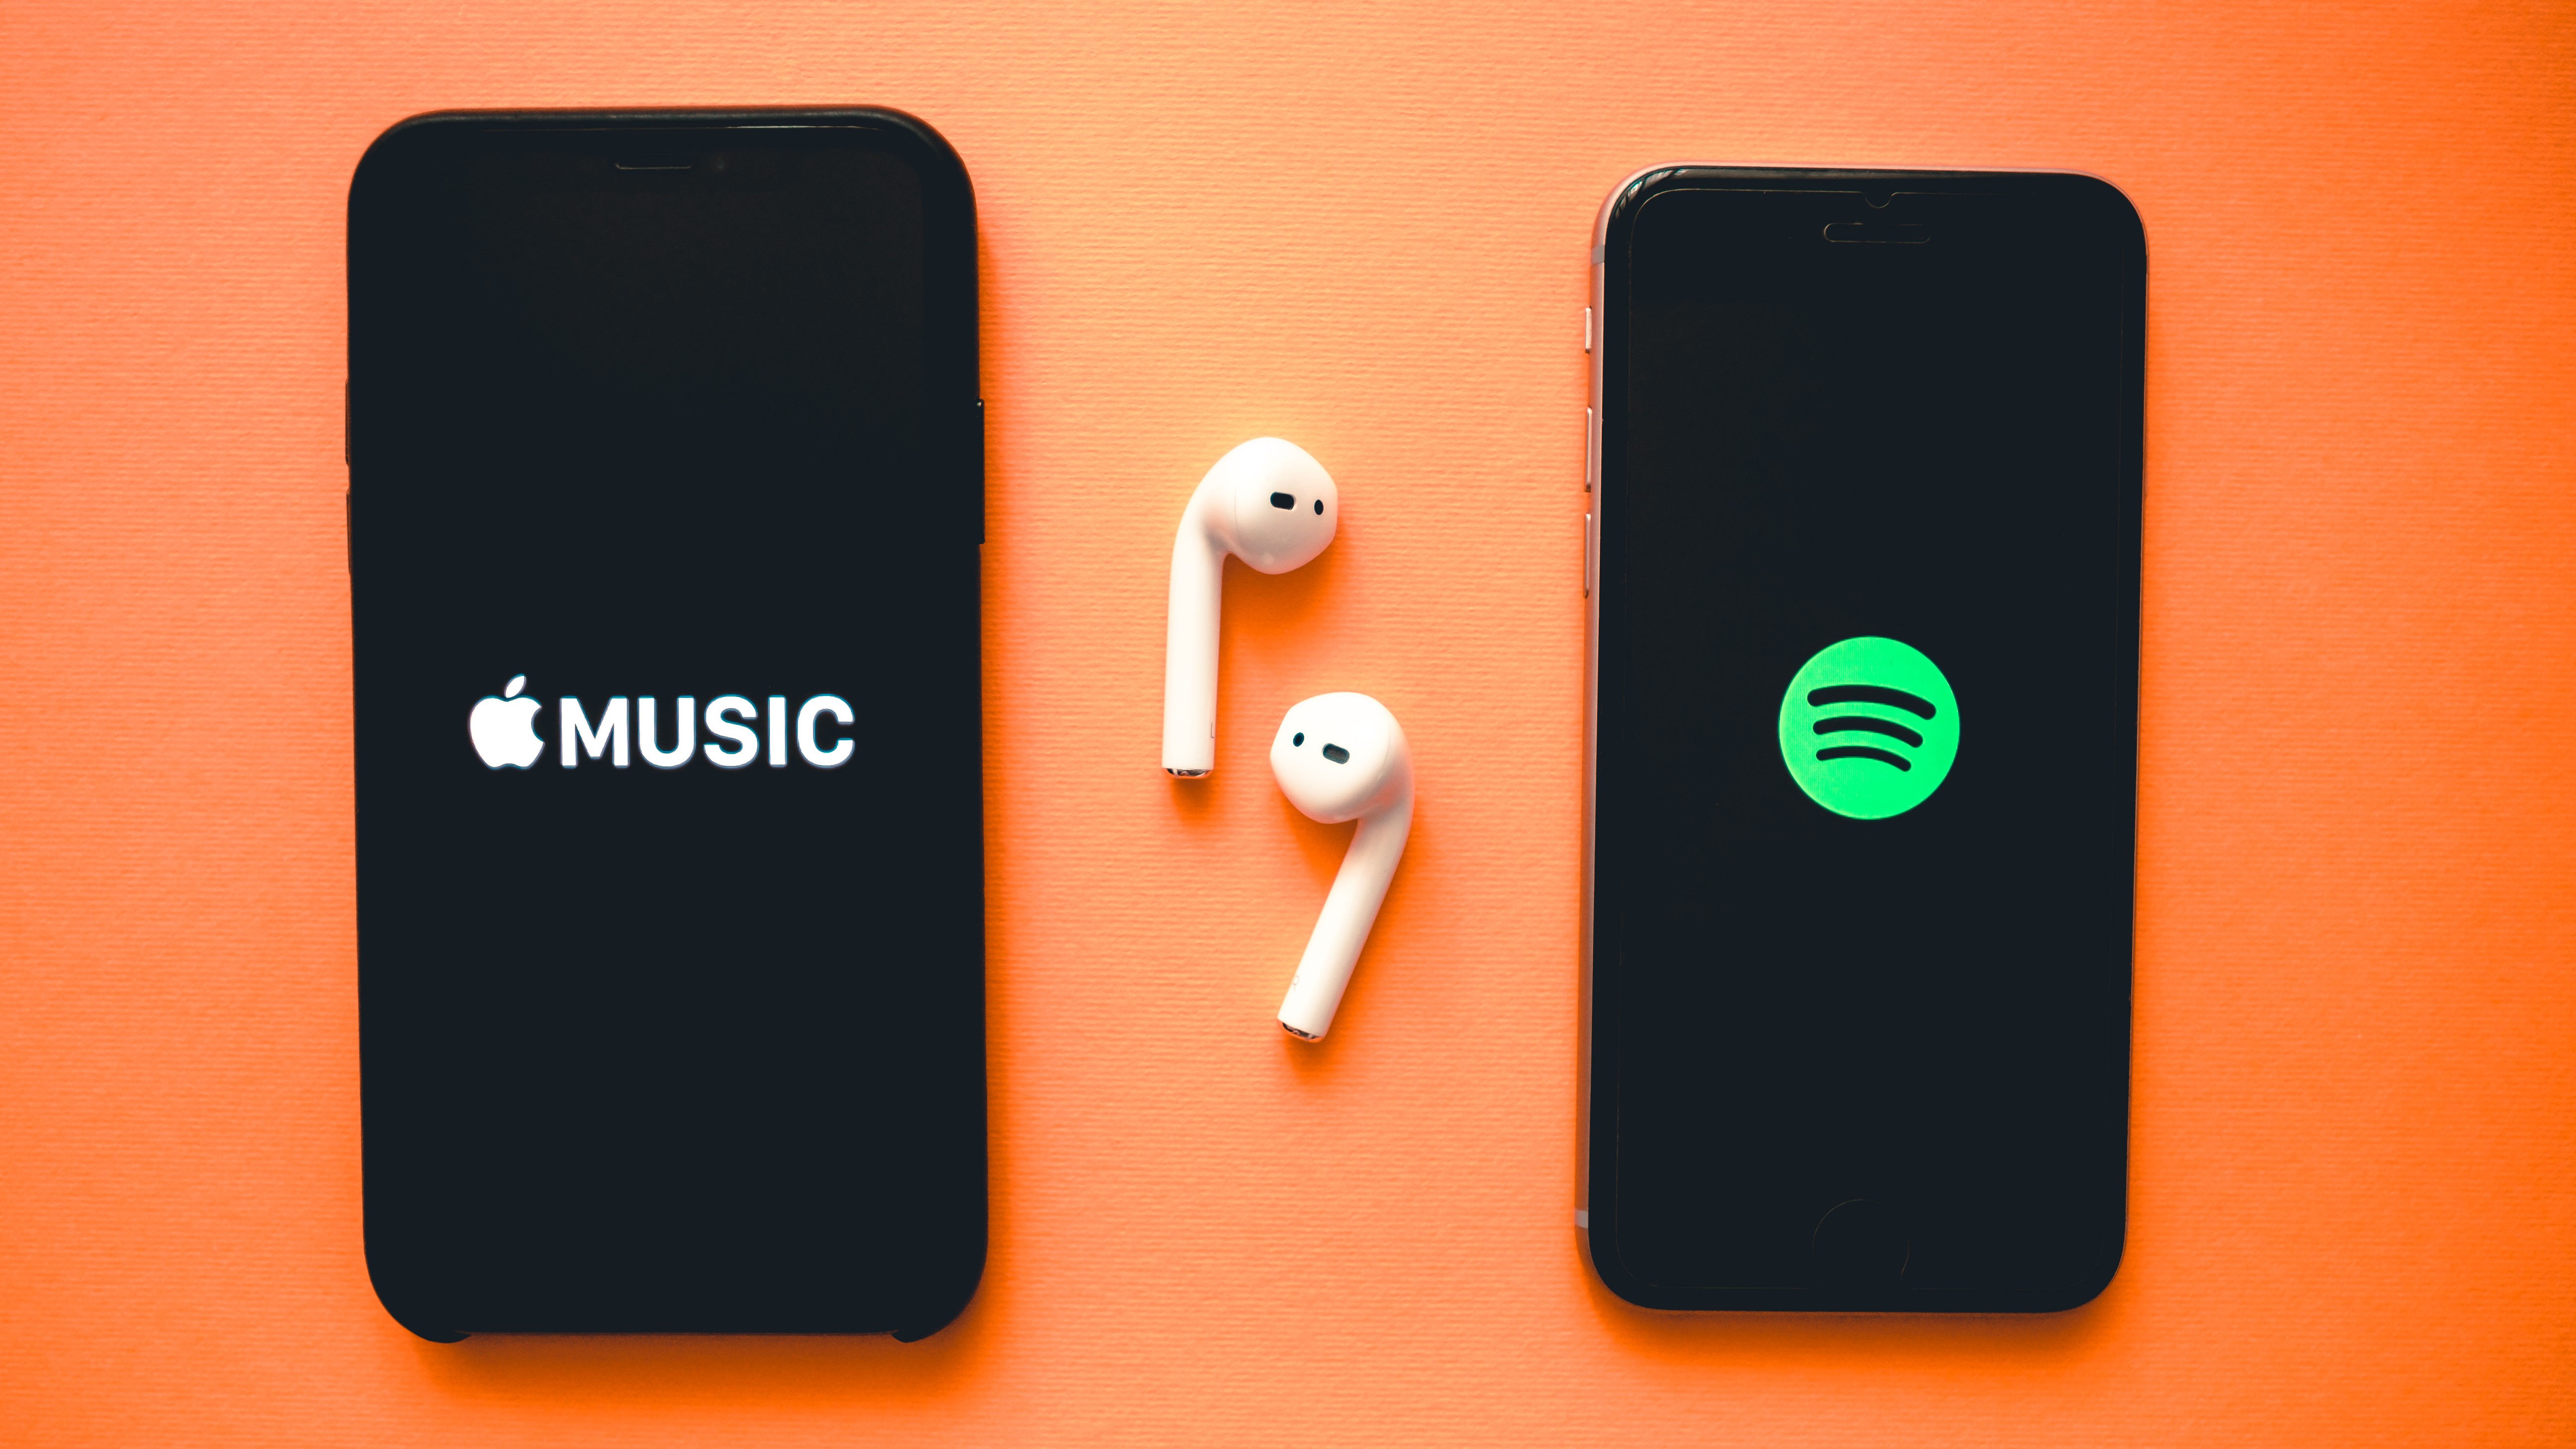 Apple Müzik ve Spotify